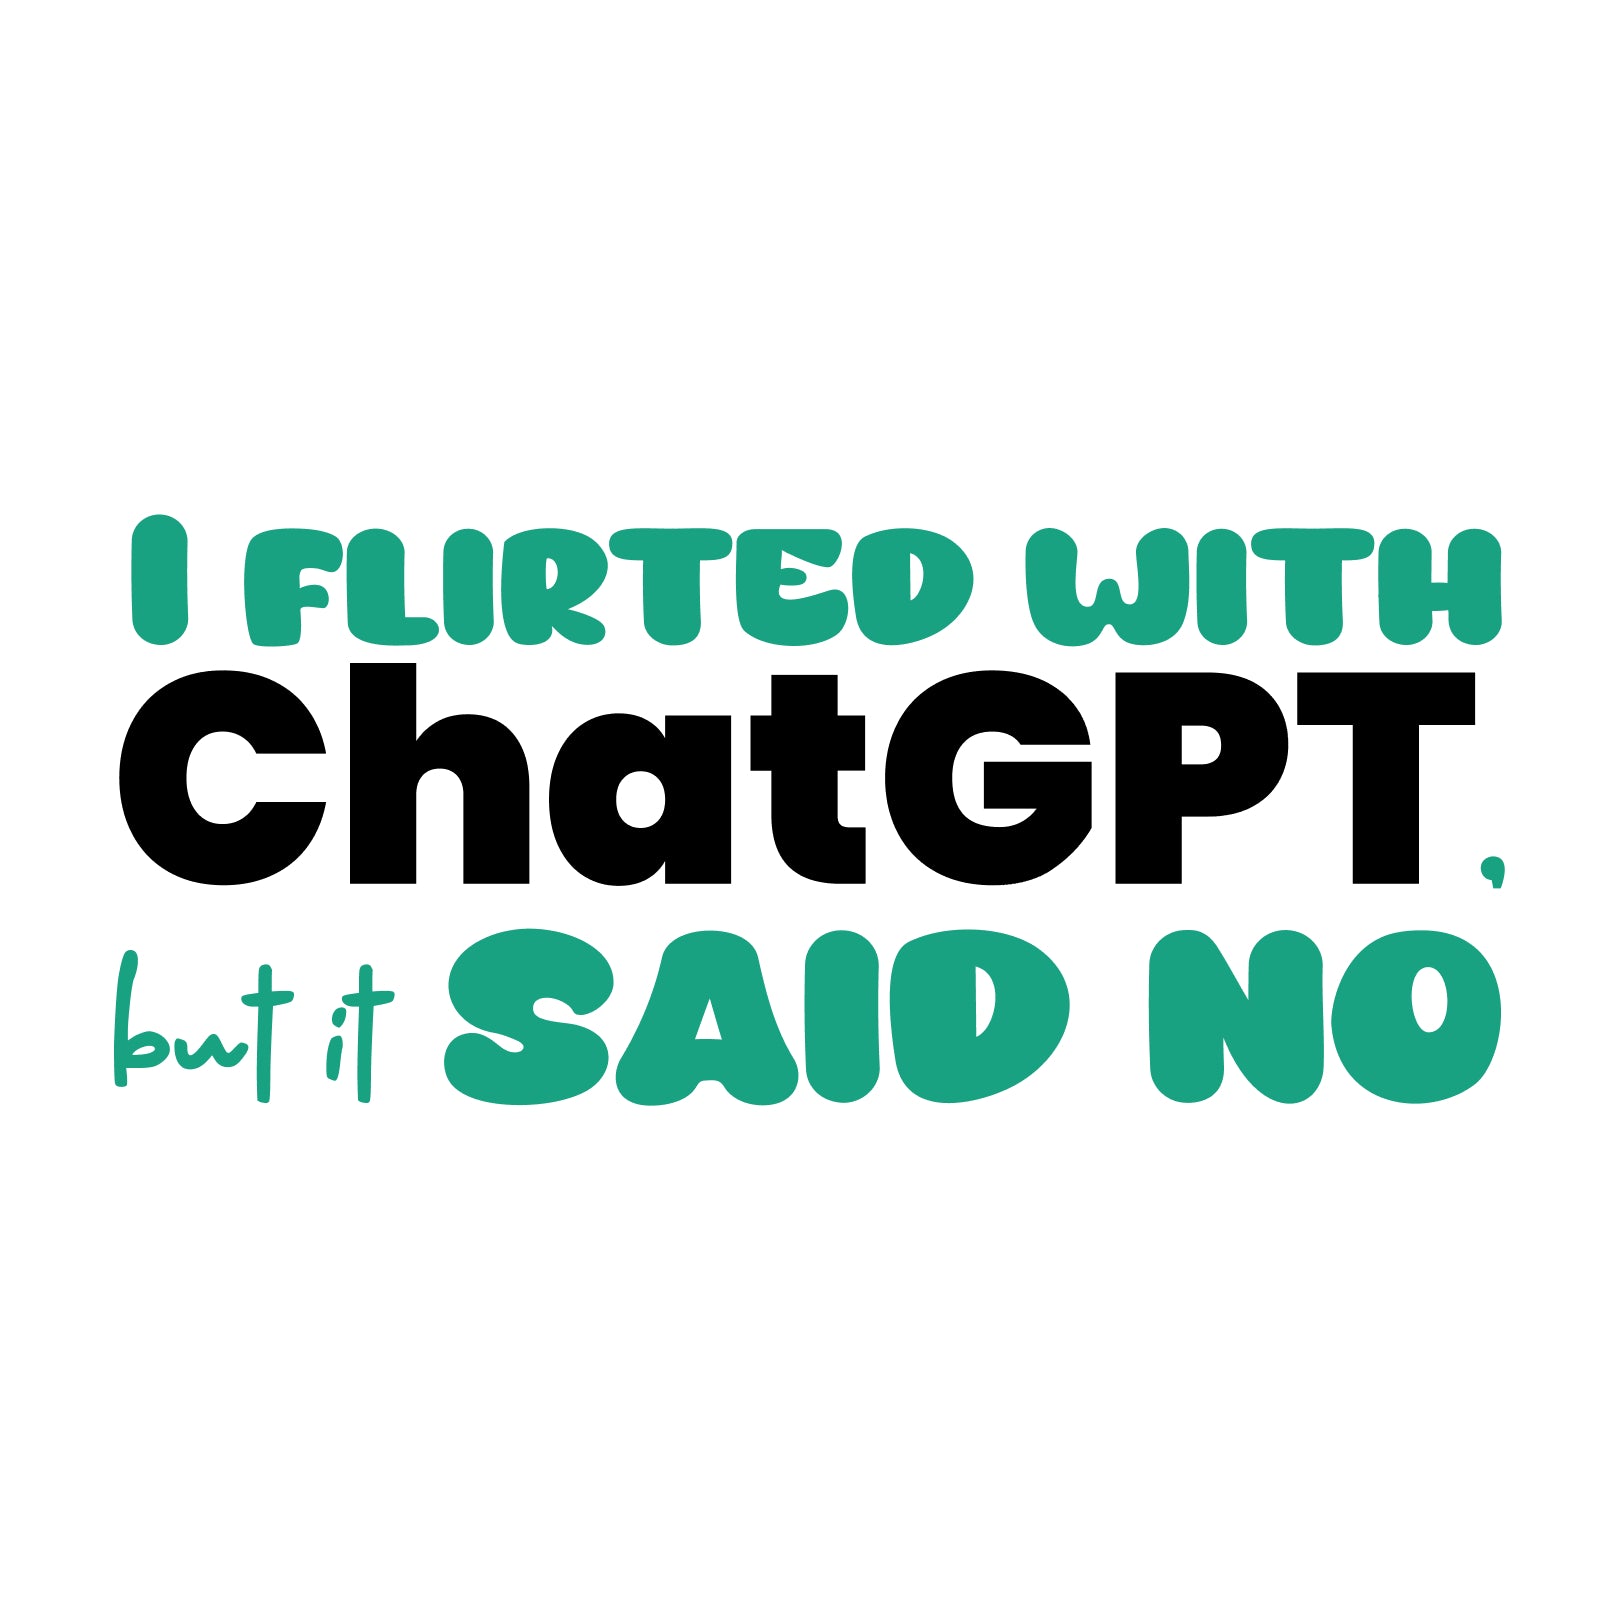 Flirting with Chat GPT Unisex Geek T-Shirt